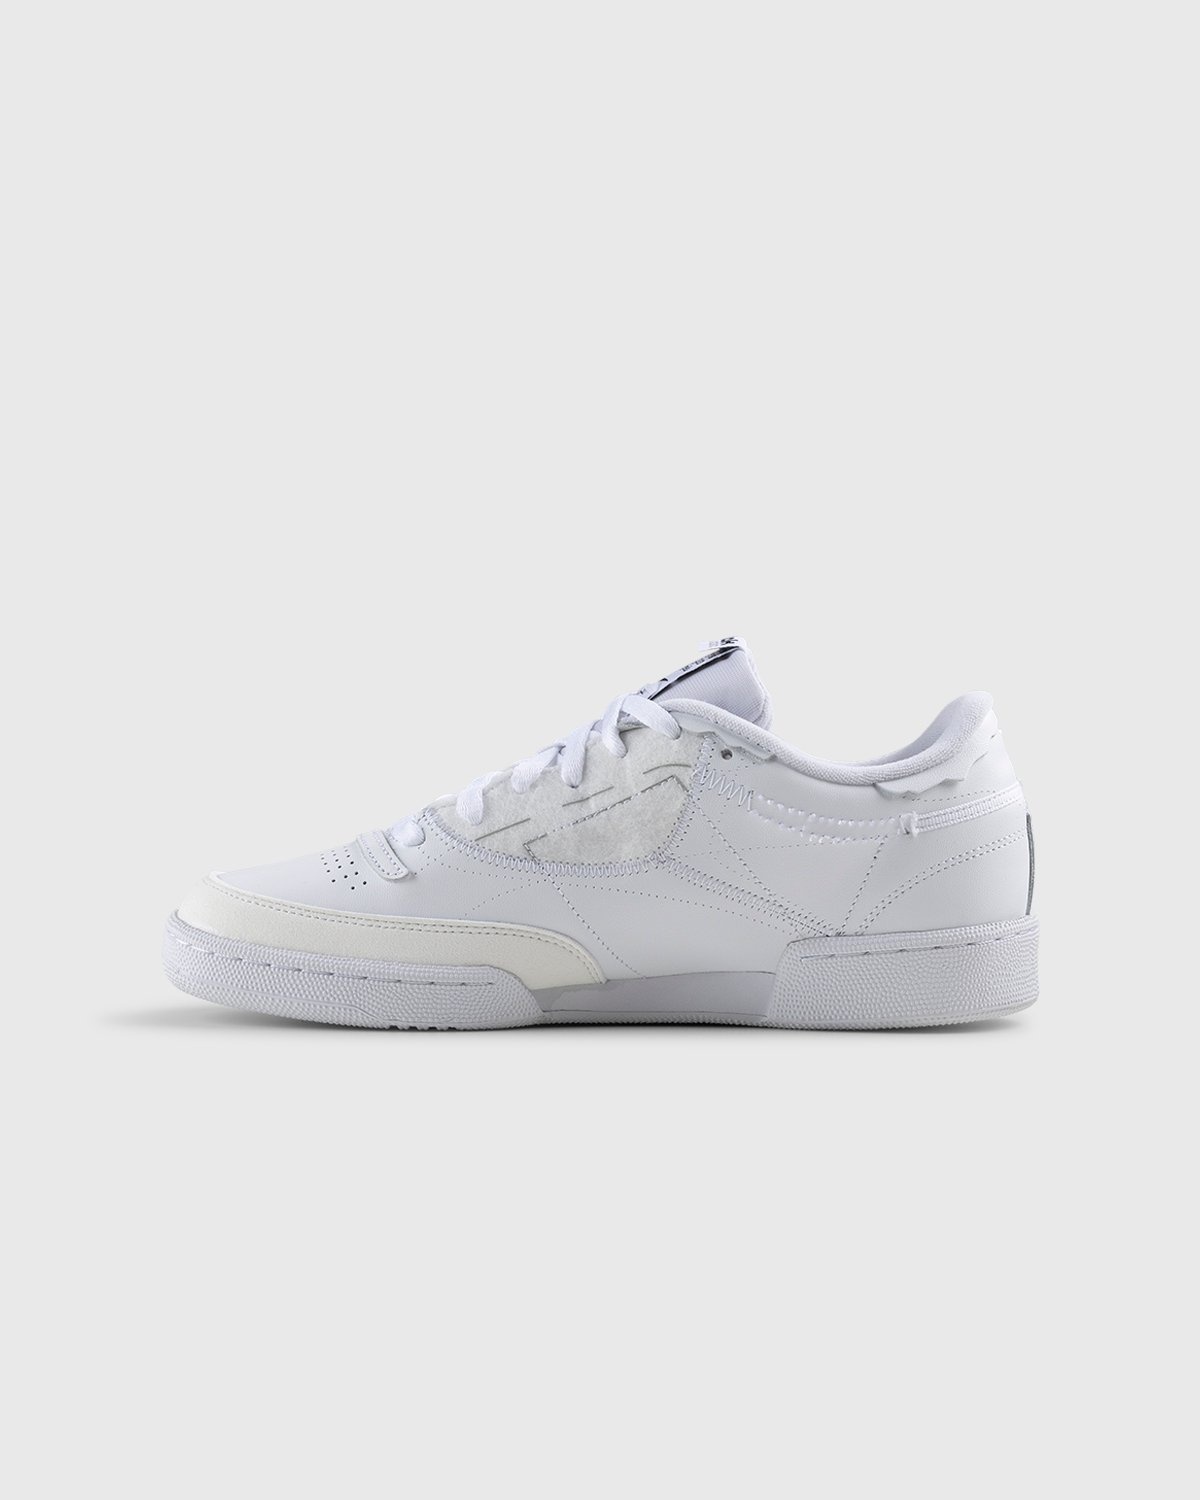 Maison Margiela x Reebok – Club C Memory Of Footwear White/Black/Footwear White - Low Top Sneakers - White - Image 2